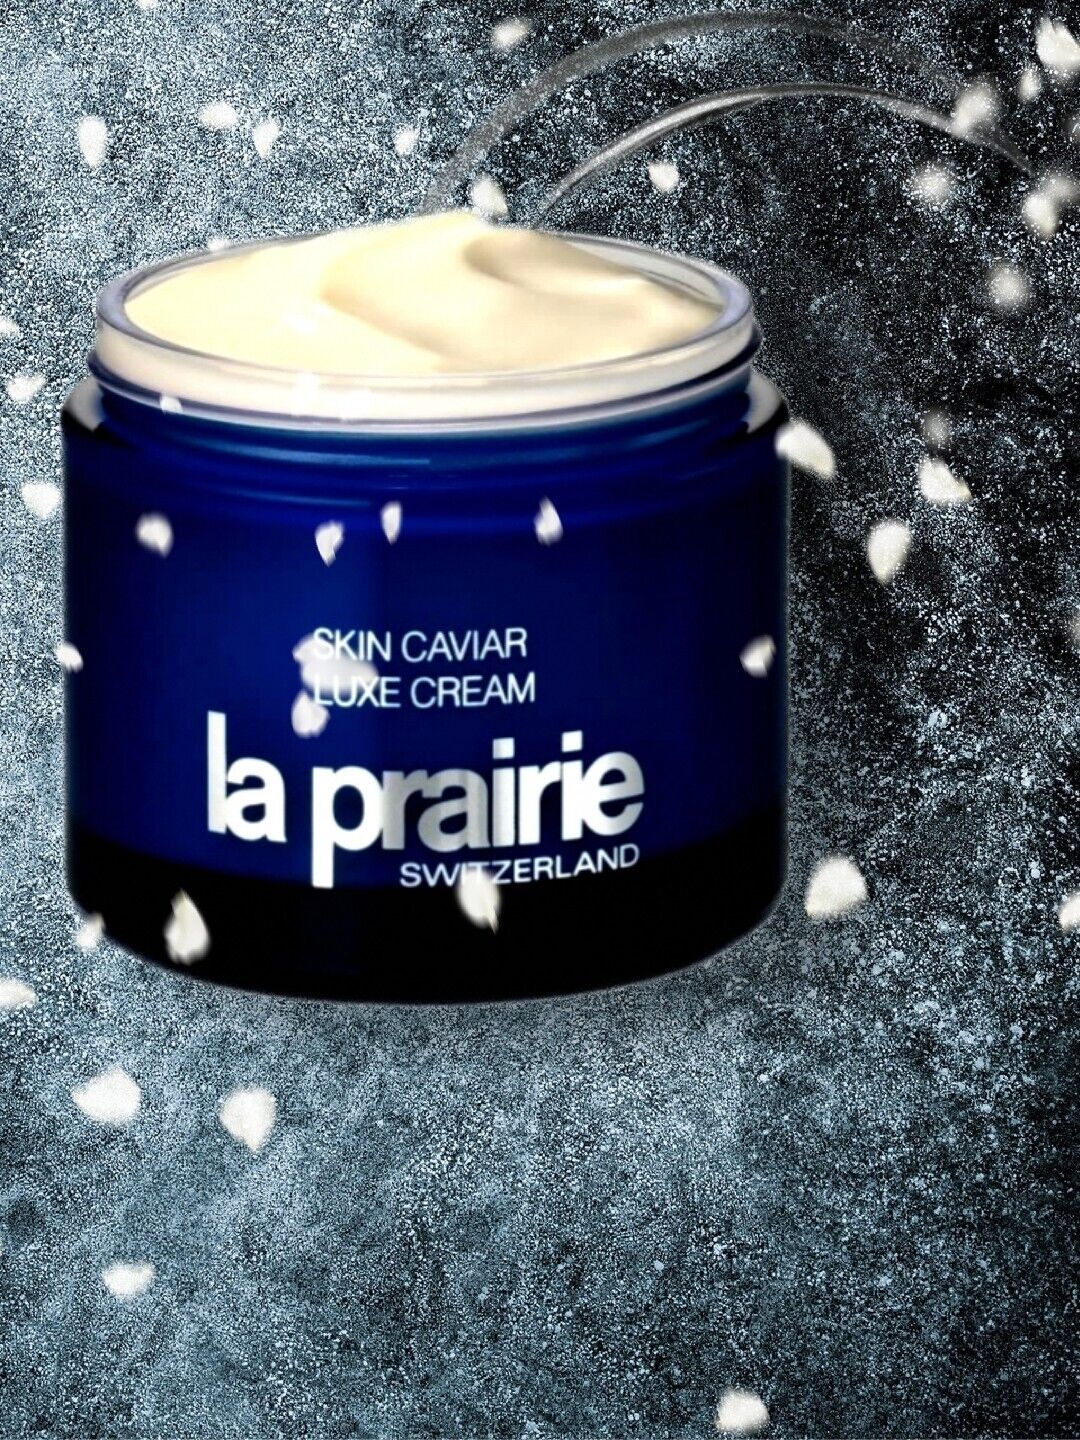 La Prairie Skin Caviar Lux Cream 50 ml Supplier Information Hardcopy By Mail